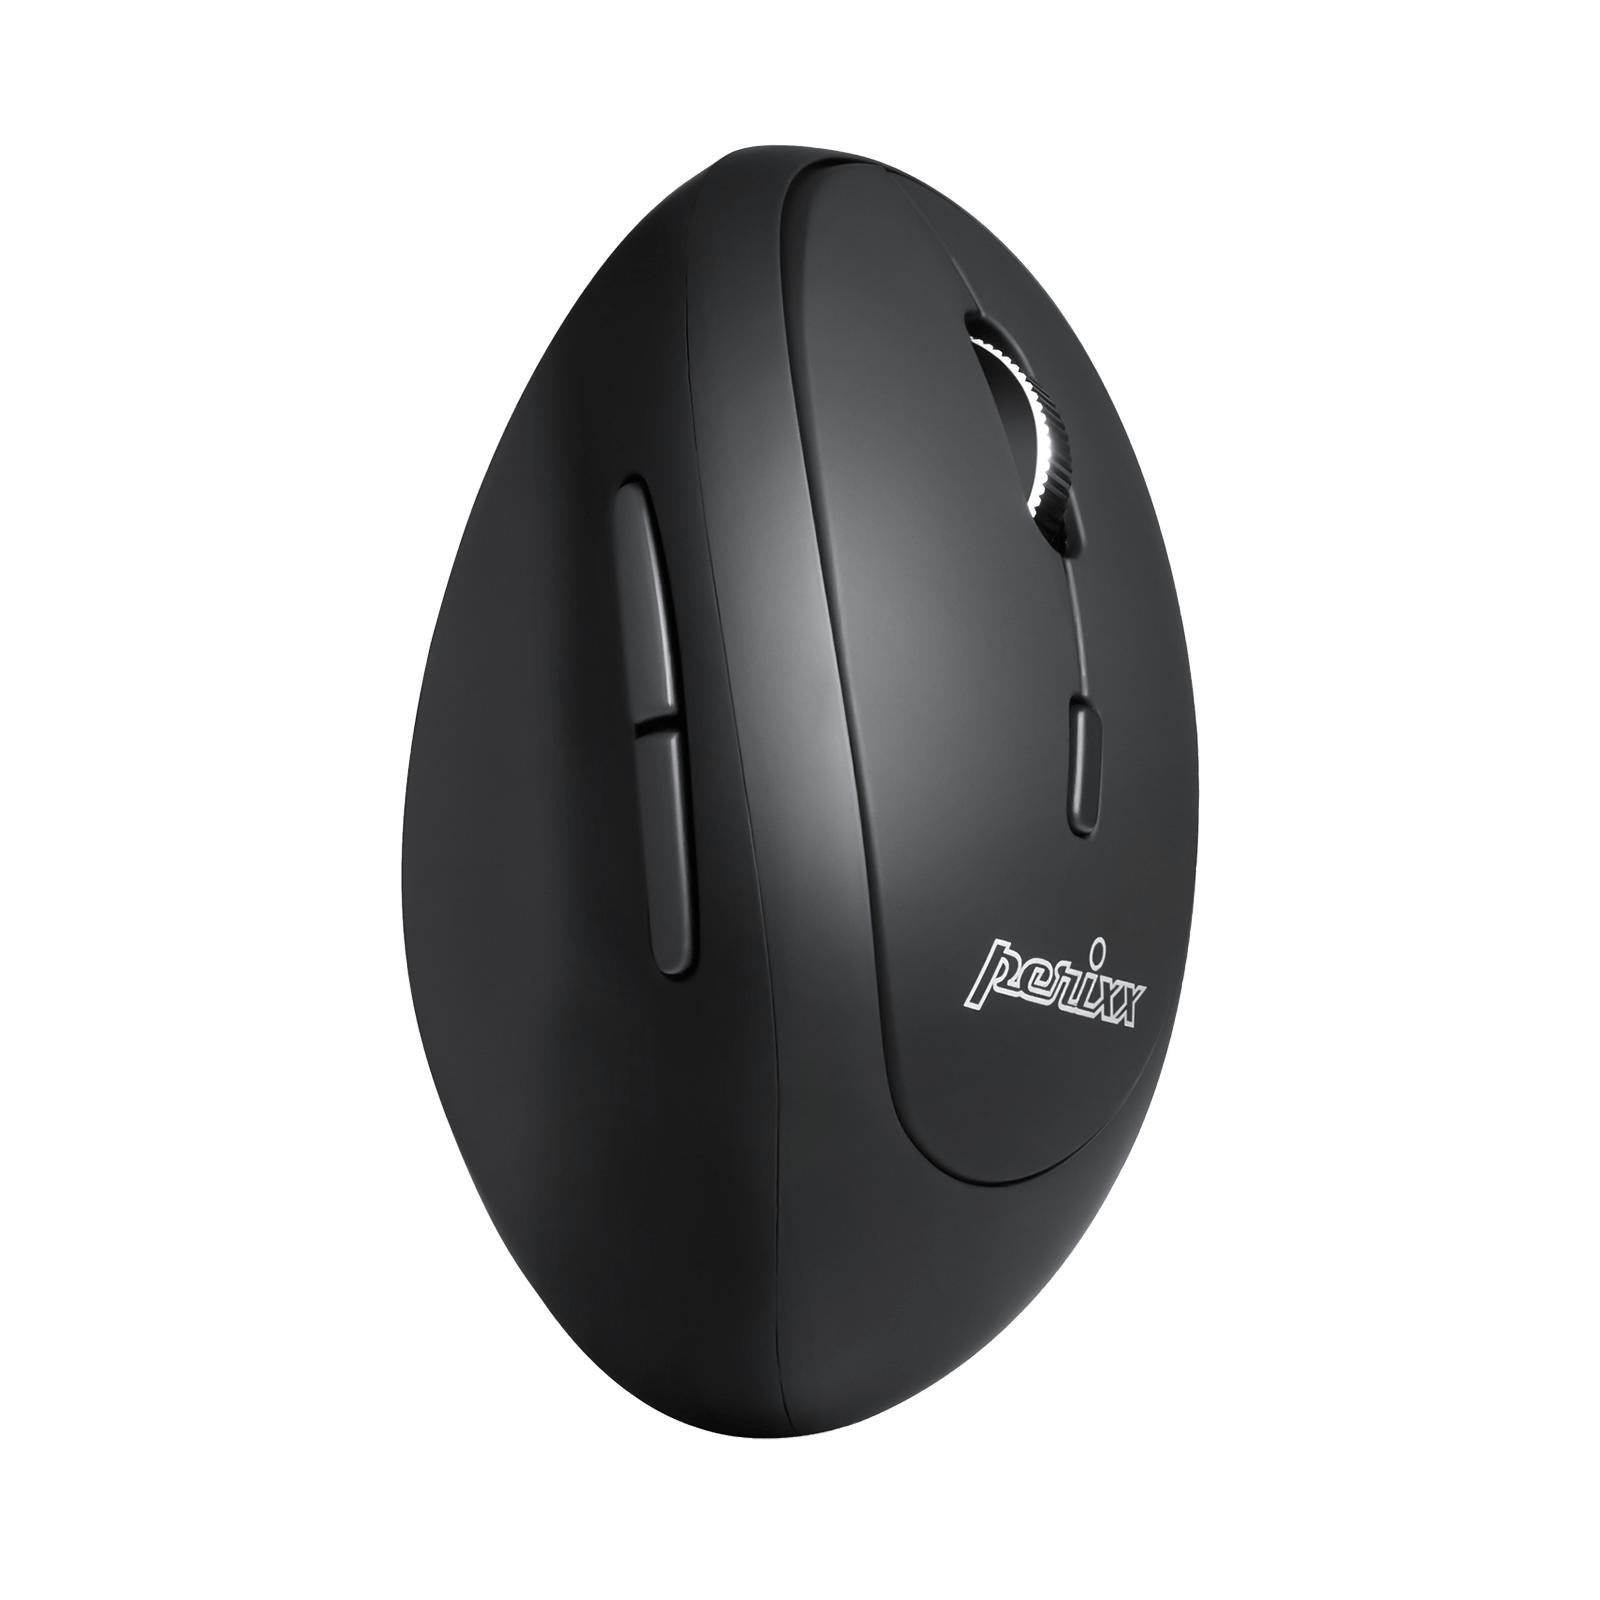 PERIMICE-819 - Wireless Ergonomic Vertical Mouse with Silent Click and Small Design- Multi-Device - Perixx Europe